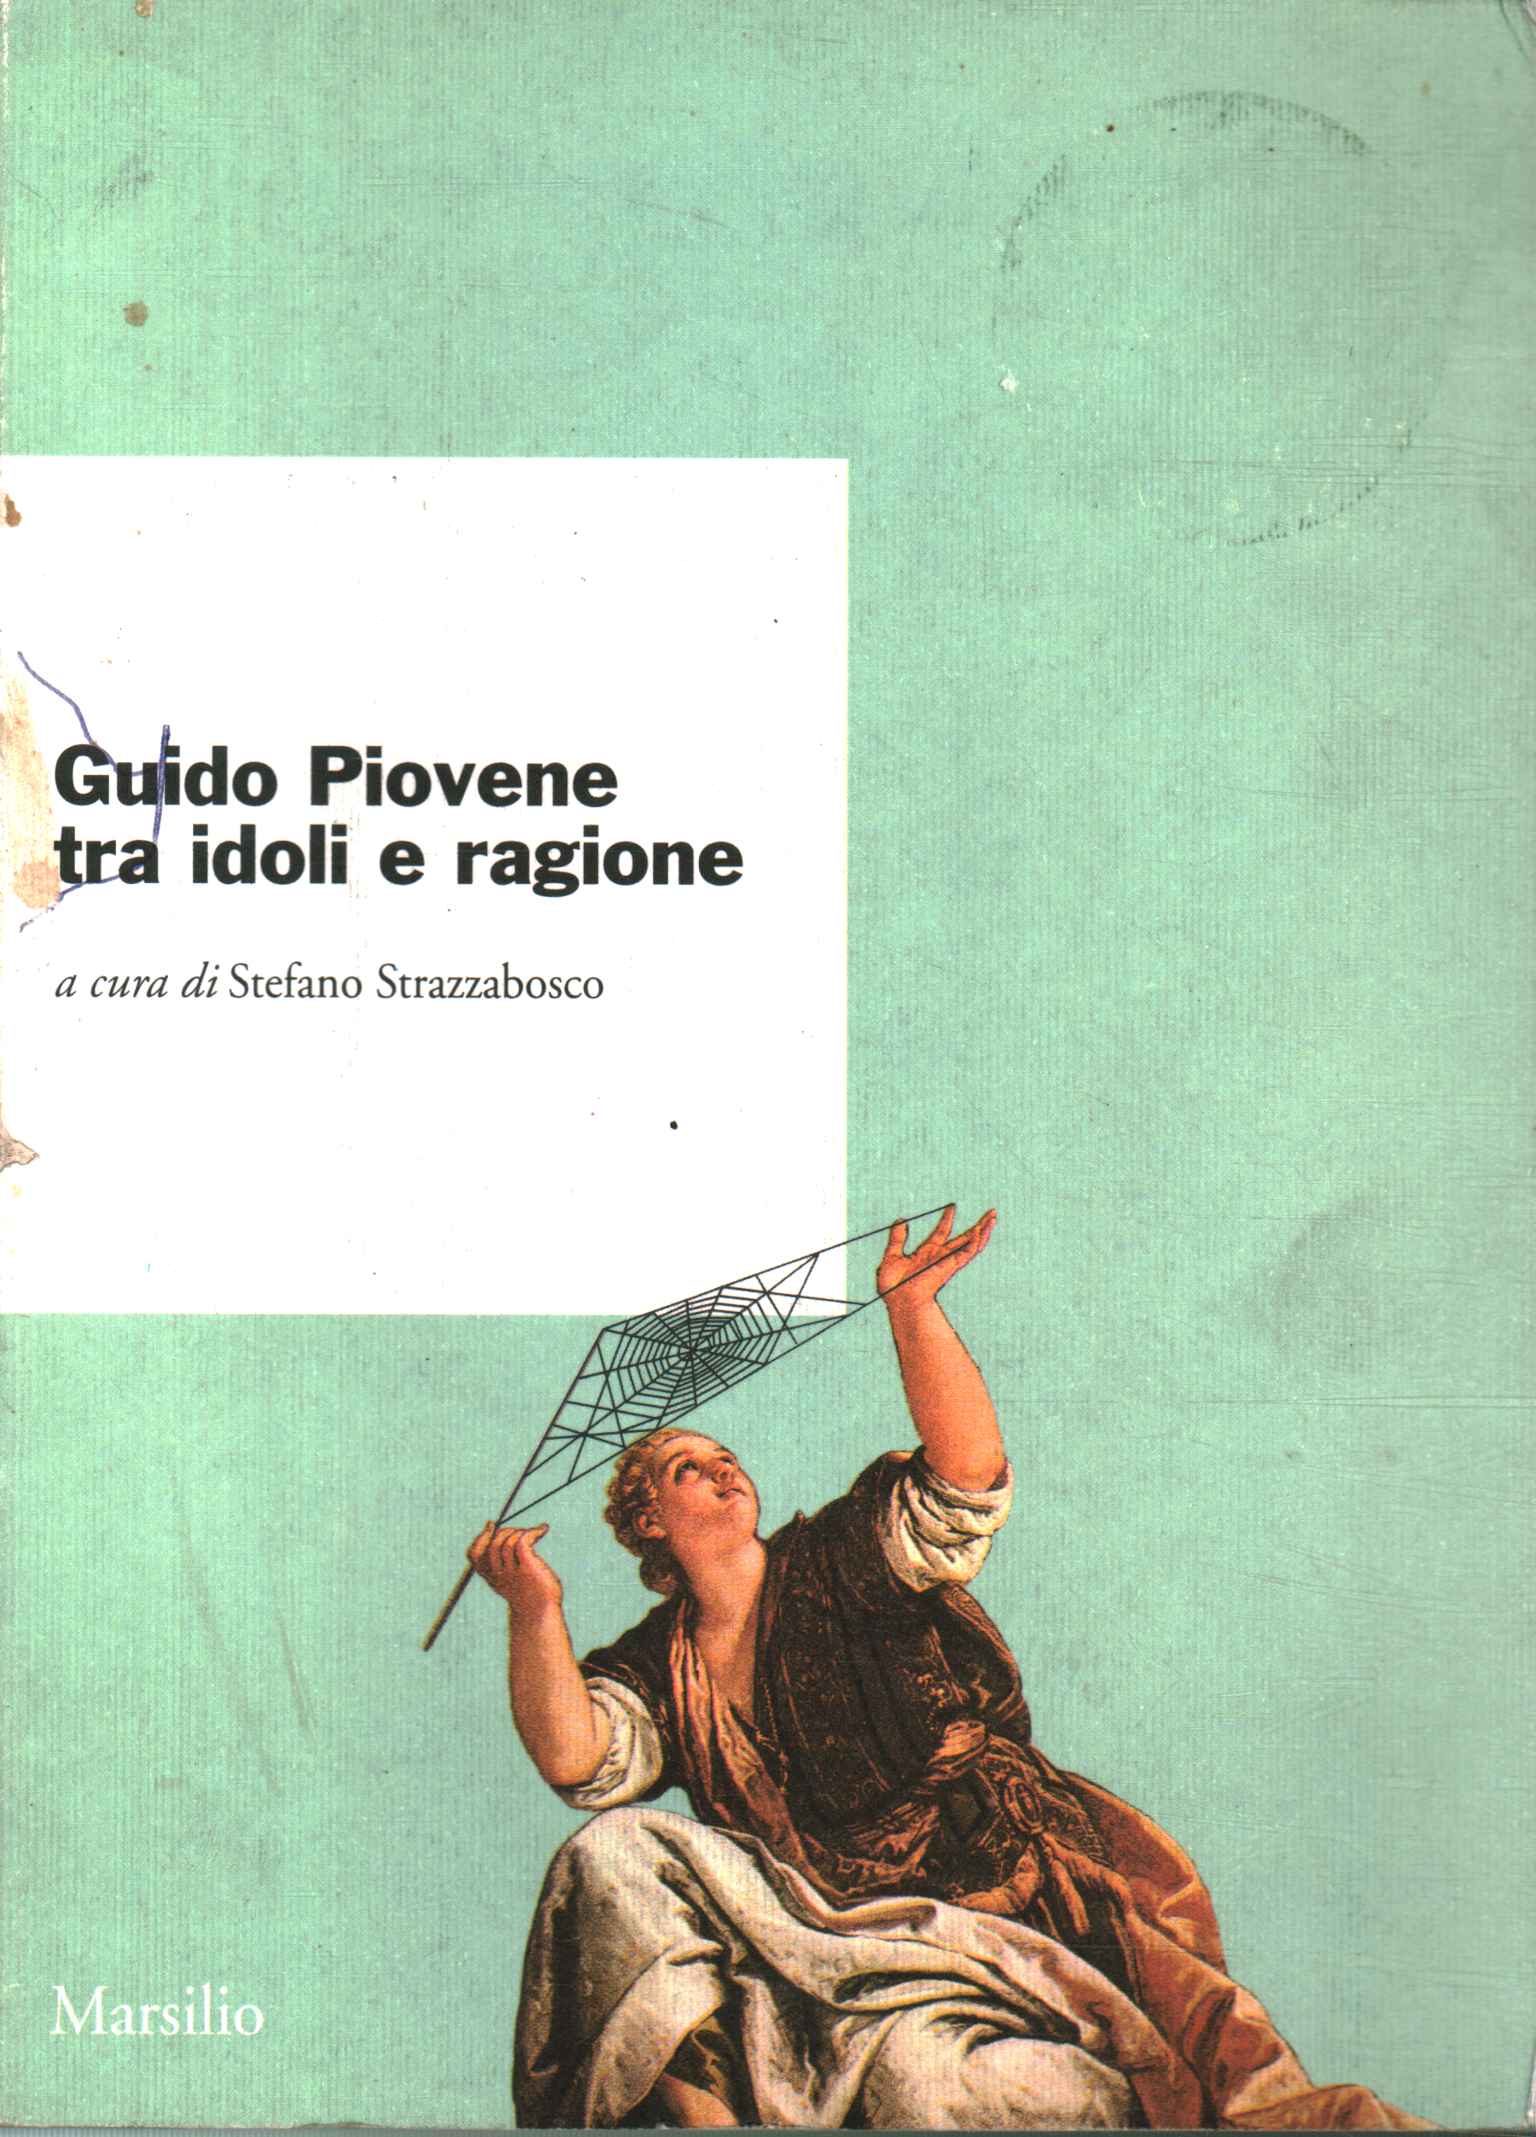 Guido Piovene between idols and reason